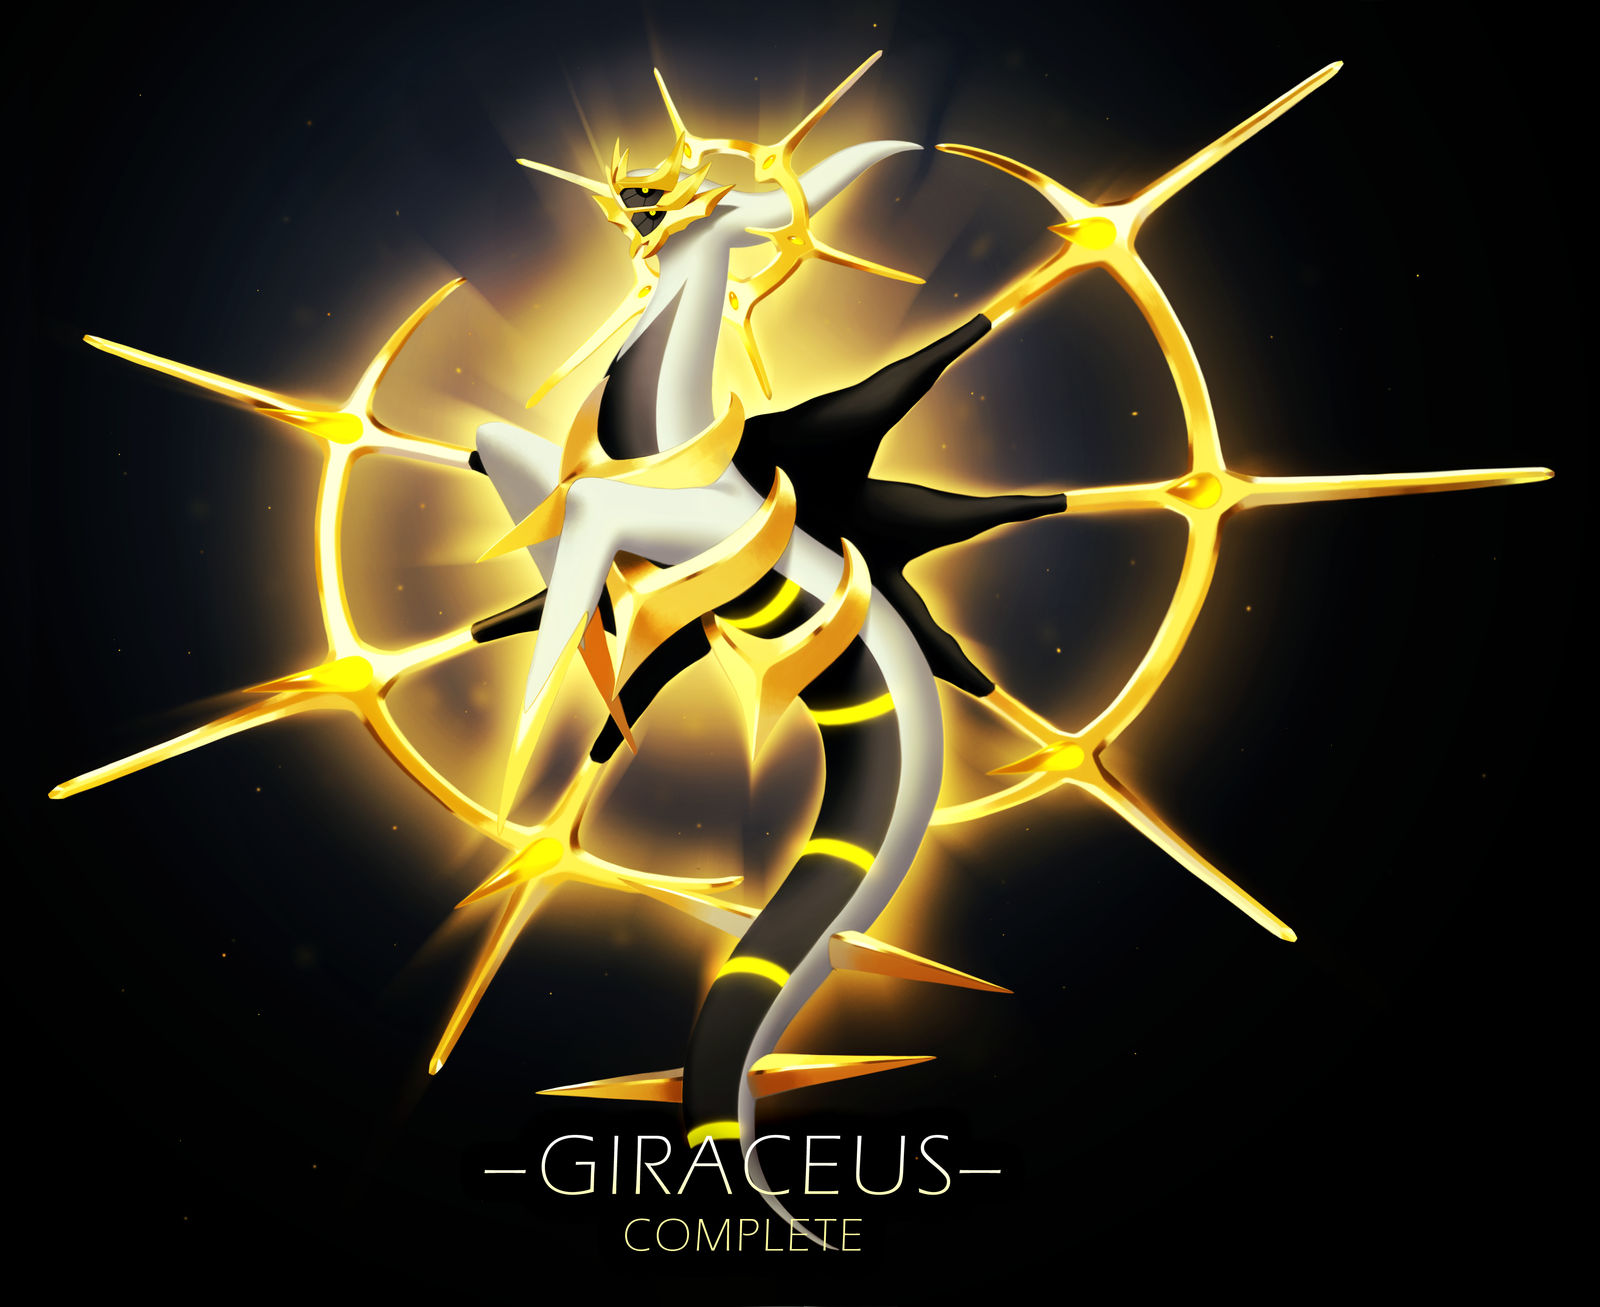 Giraceus-Complete by Sylvaur on DeviantArt